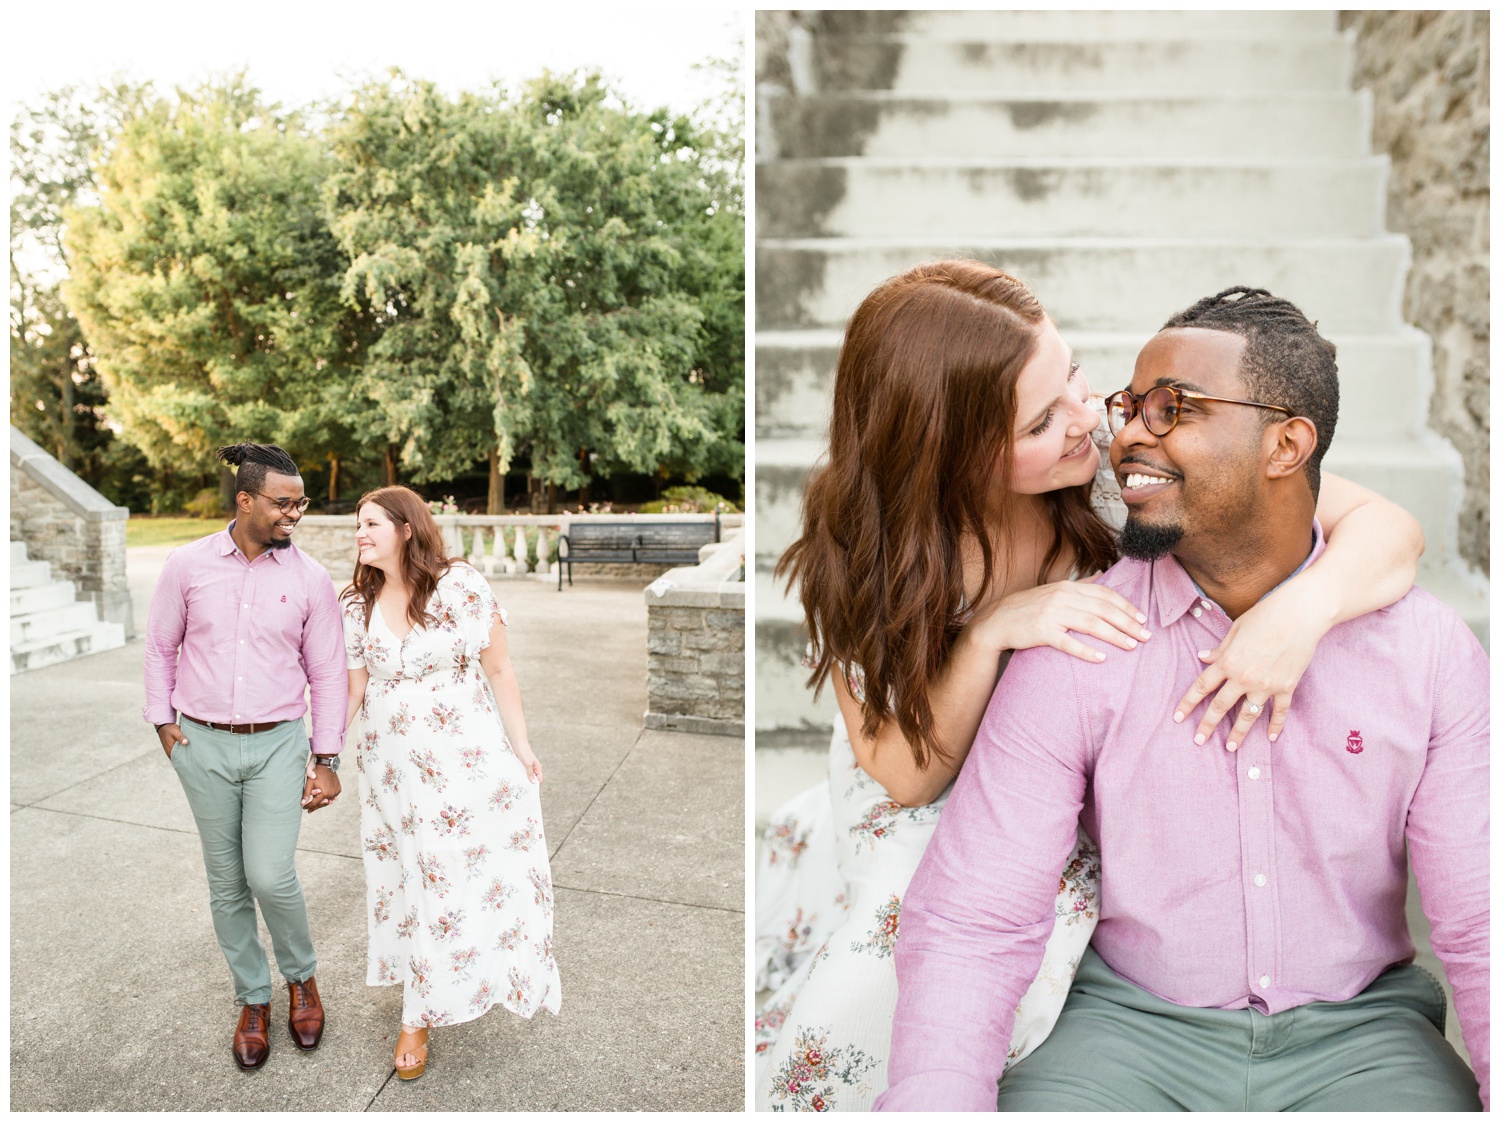 Interracial Couple - Interracial Engagement at Ault Park